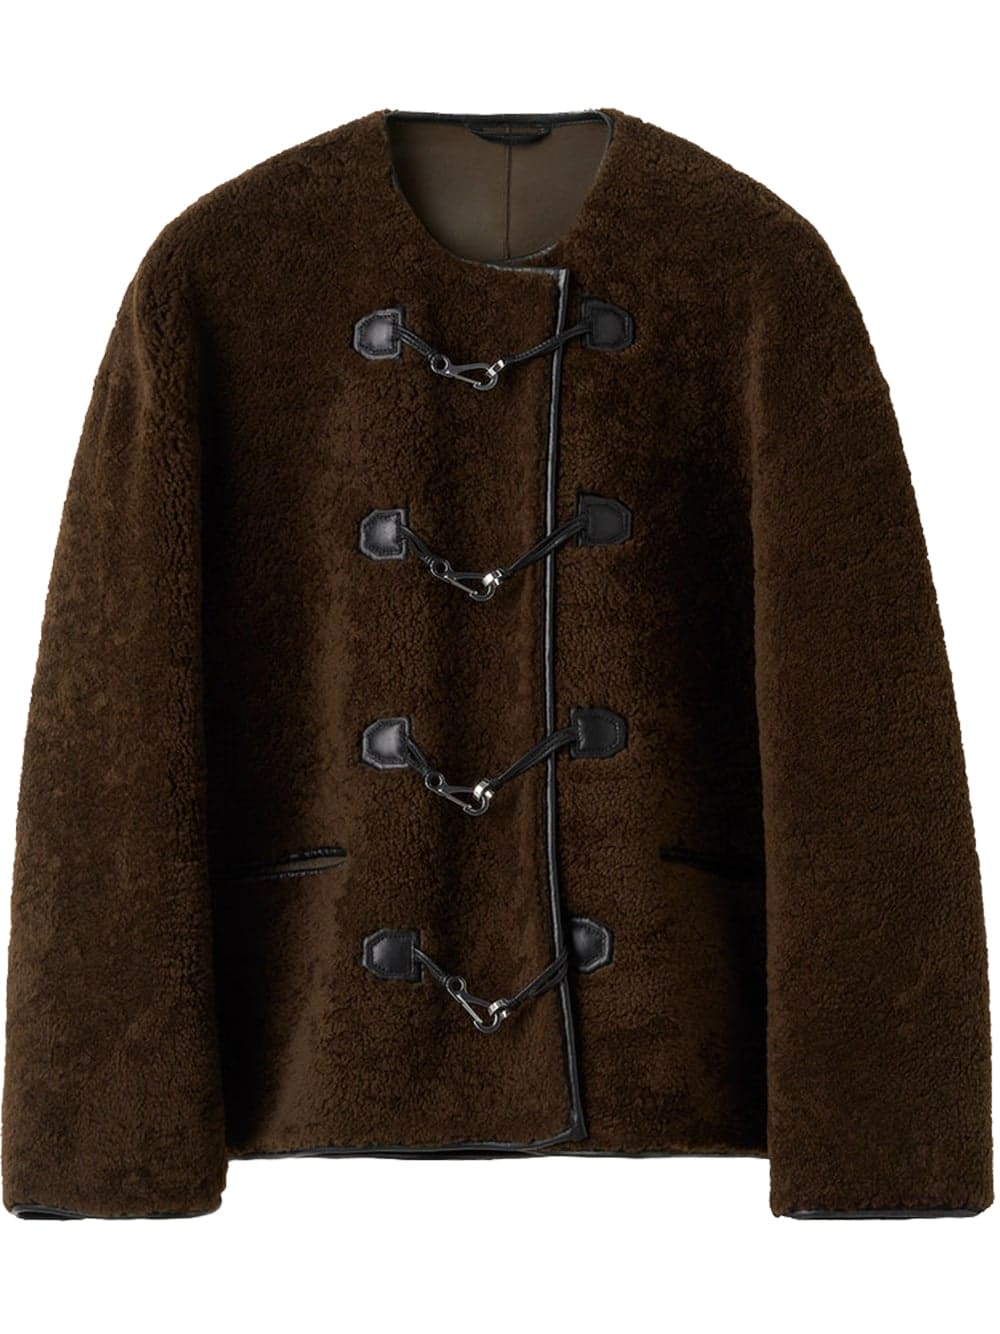 Toteme Teddy shearling jacket Saddle brown (Size: M/L)